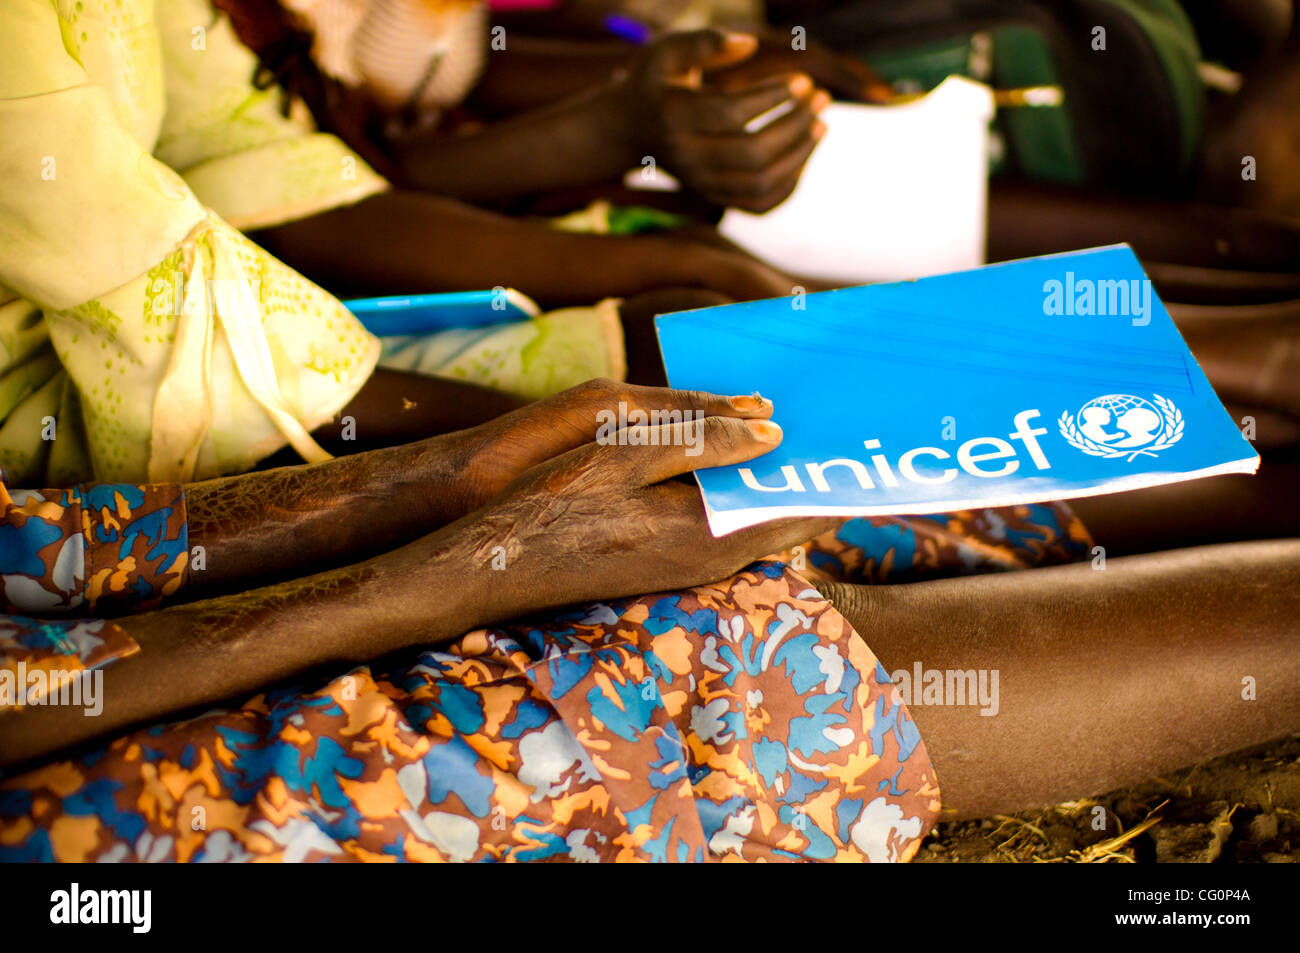 Jul. 11, 2007 - Kolmerek, South Sudan - A survivors of the 21-year-long civil war in Southern Sudan, this child's burn marks tell a story of her hardship. (Credit Image: © Micah Albert/zReportage.com/ZUMA) Stock Photo